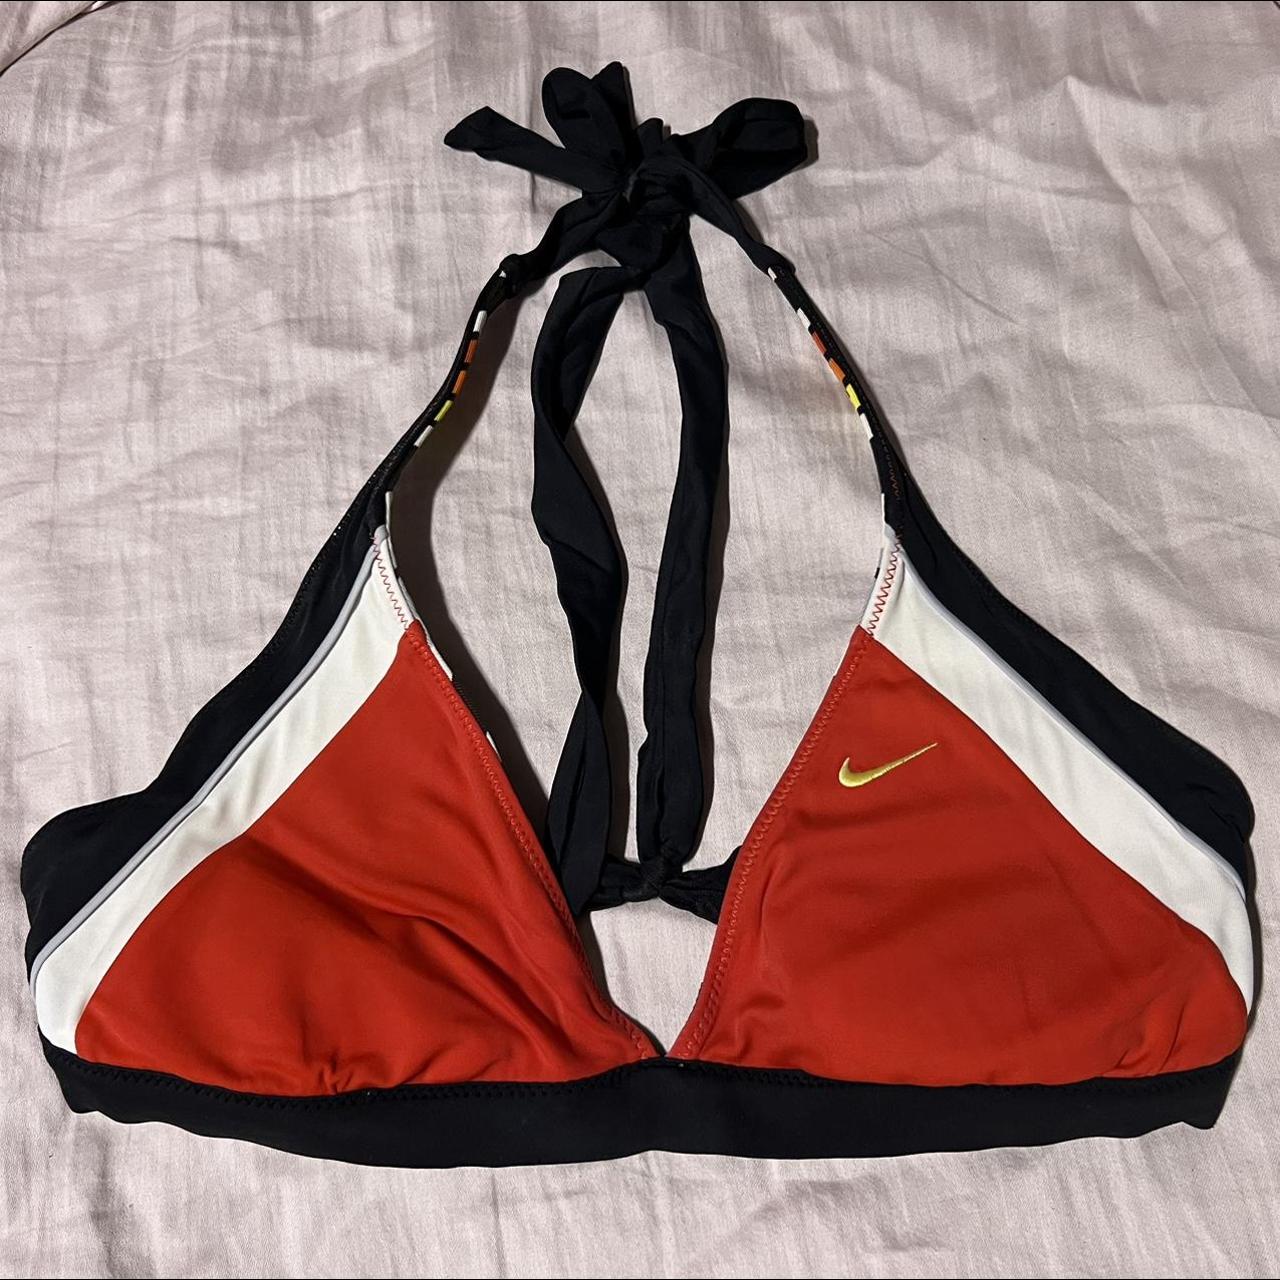 Vintage Nike bikini top. Super cute and in great... - Depop